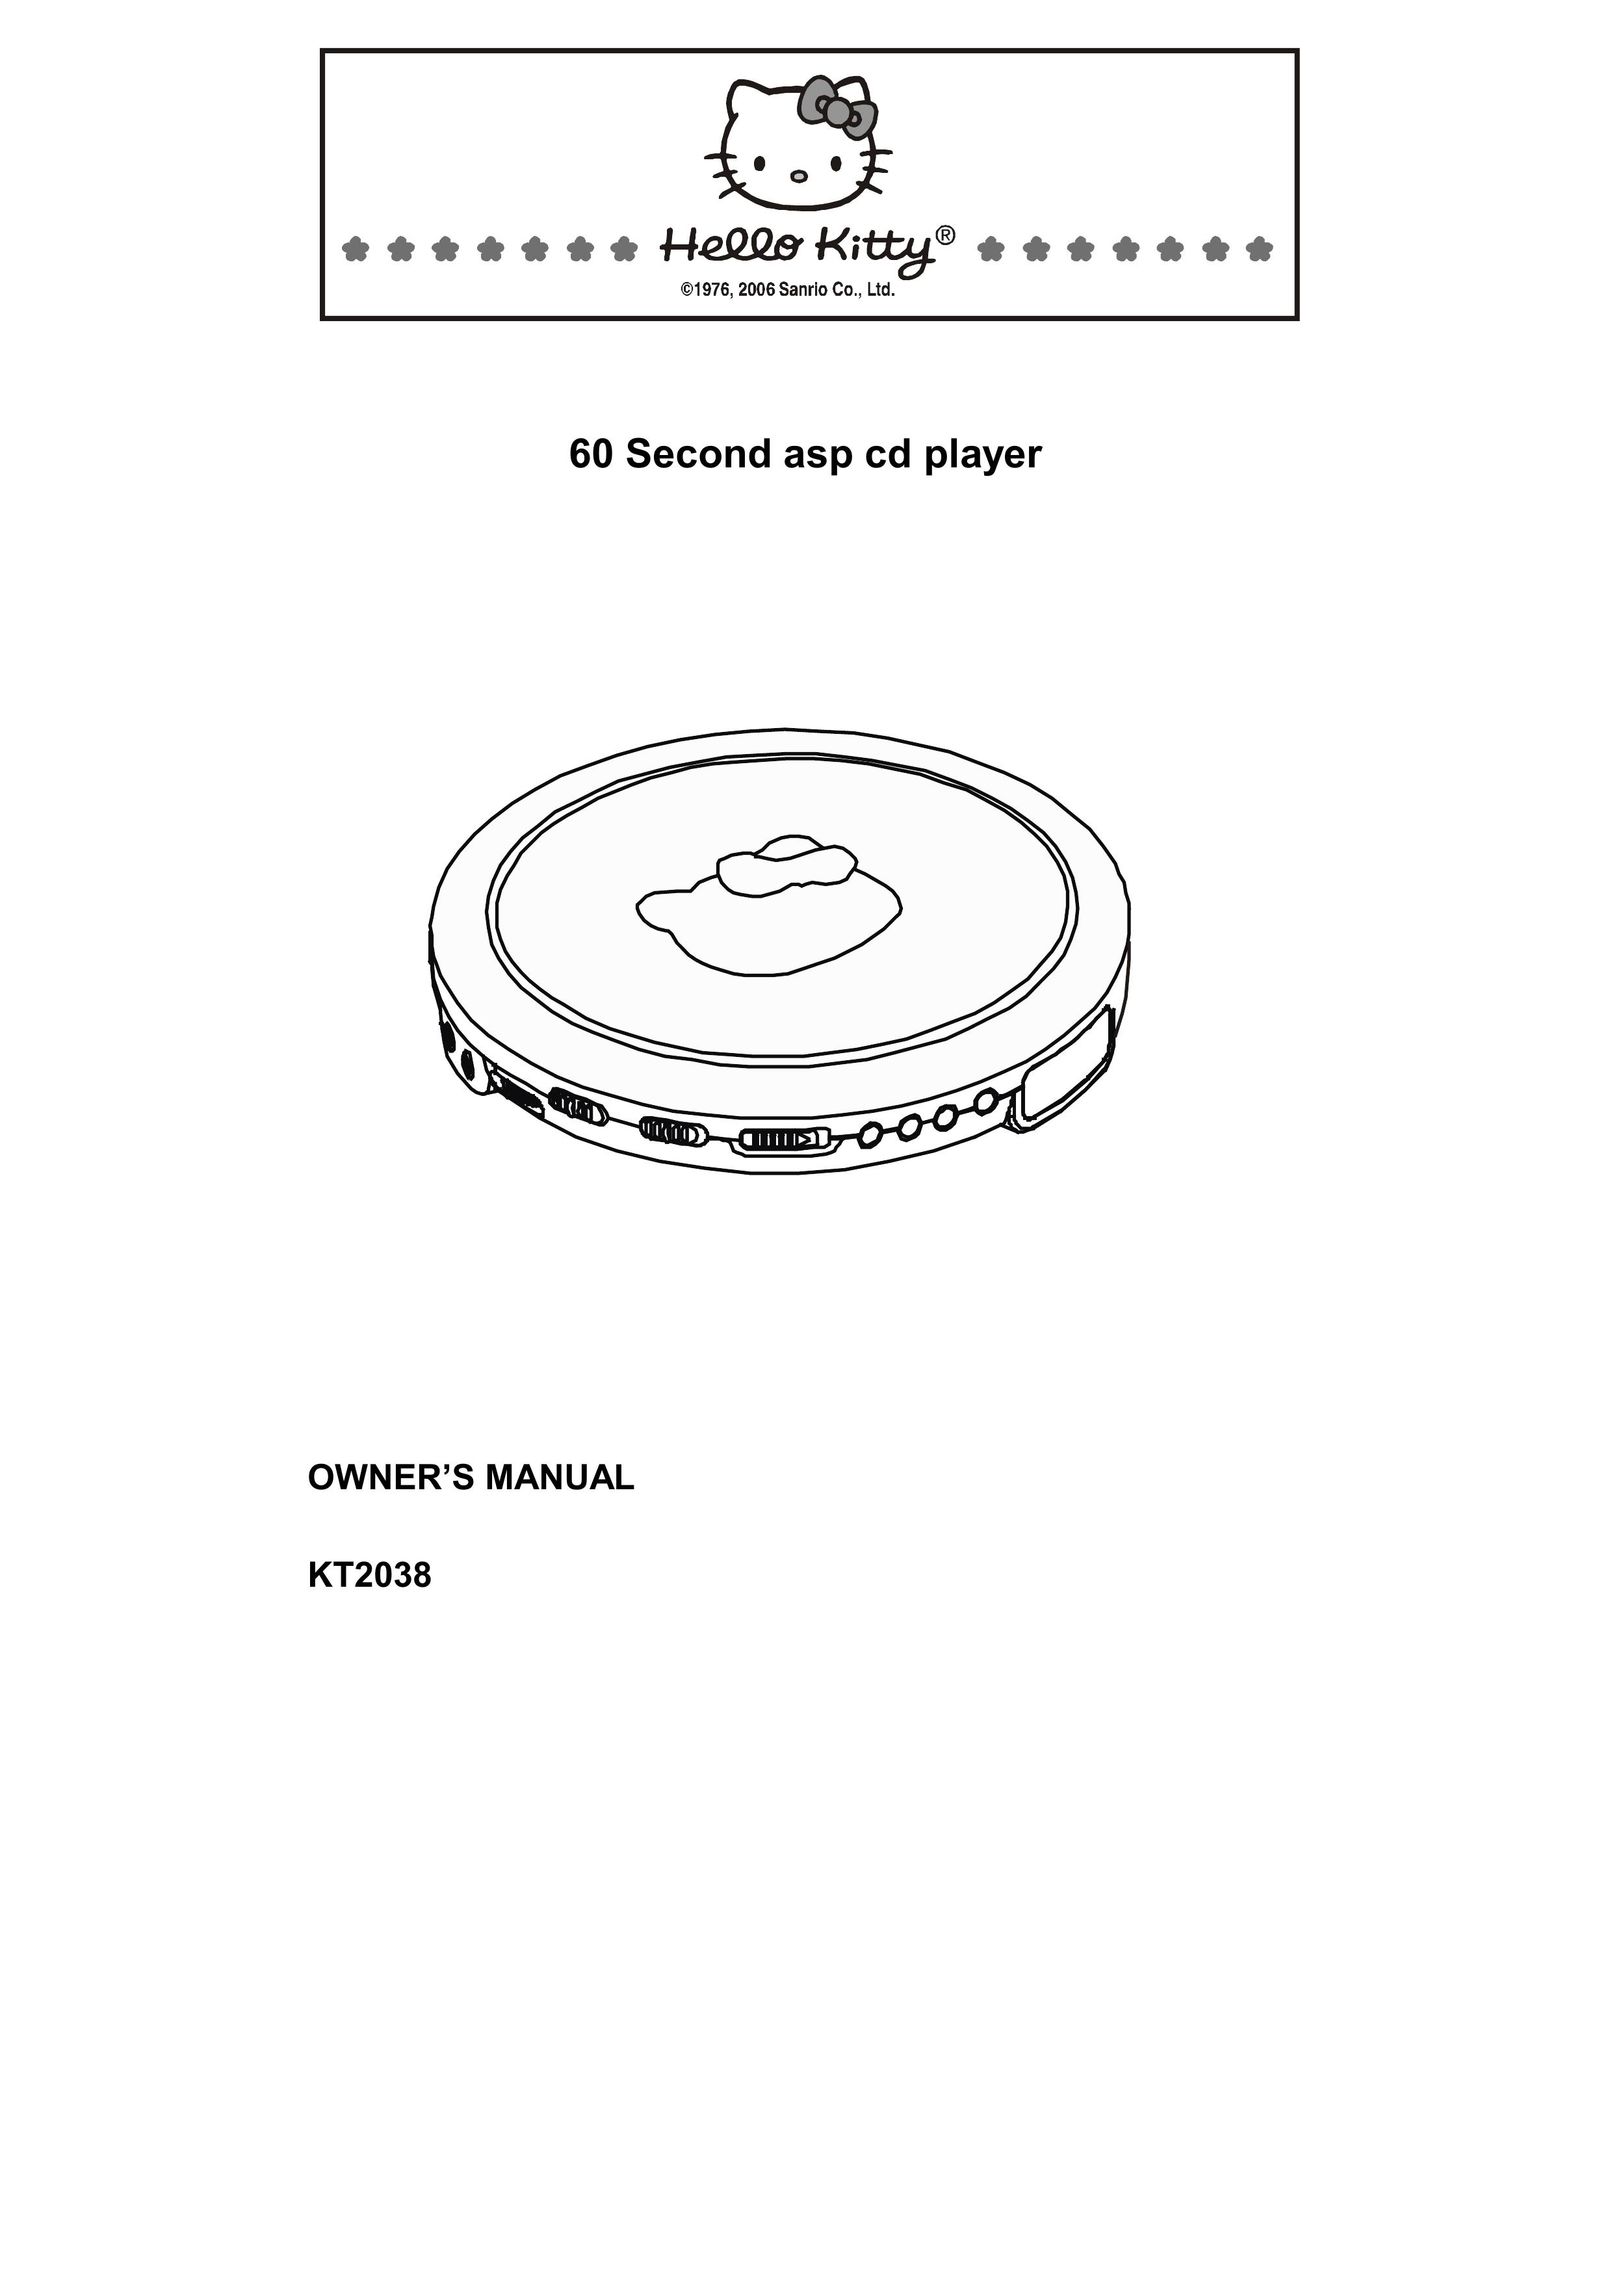 Spectra KT2038 CD Player User Manual